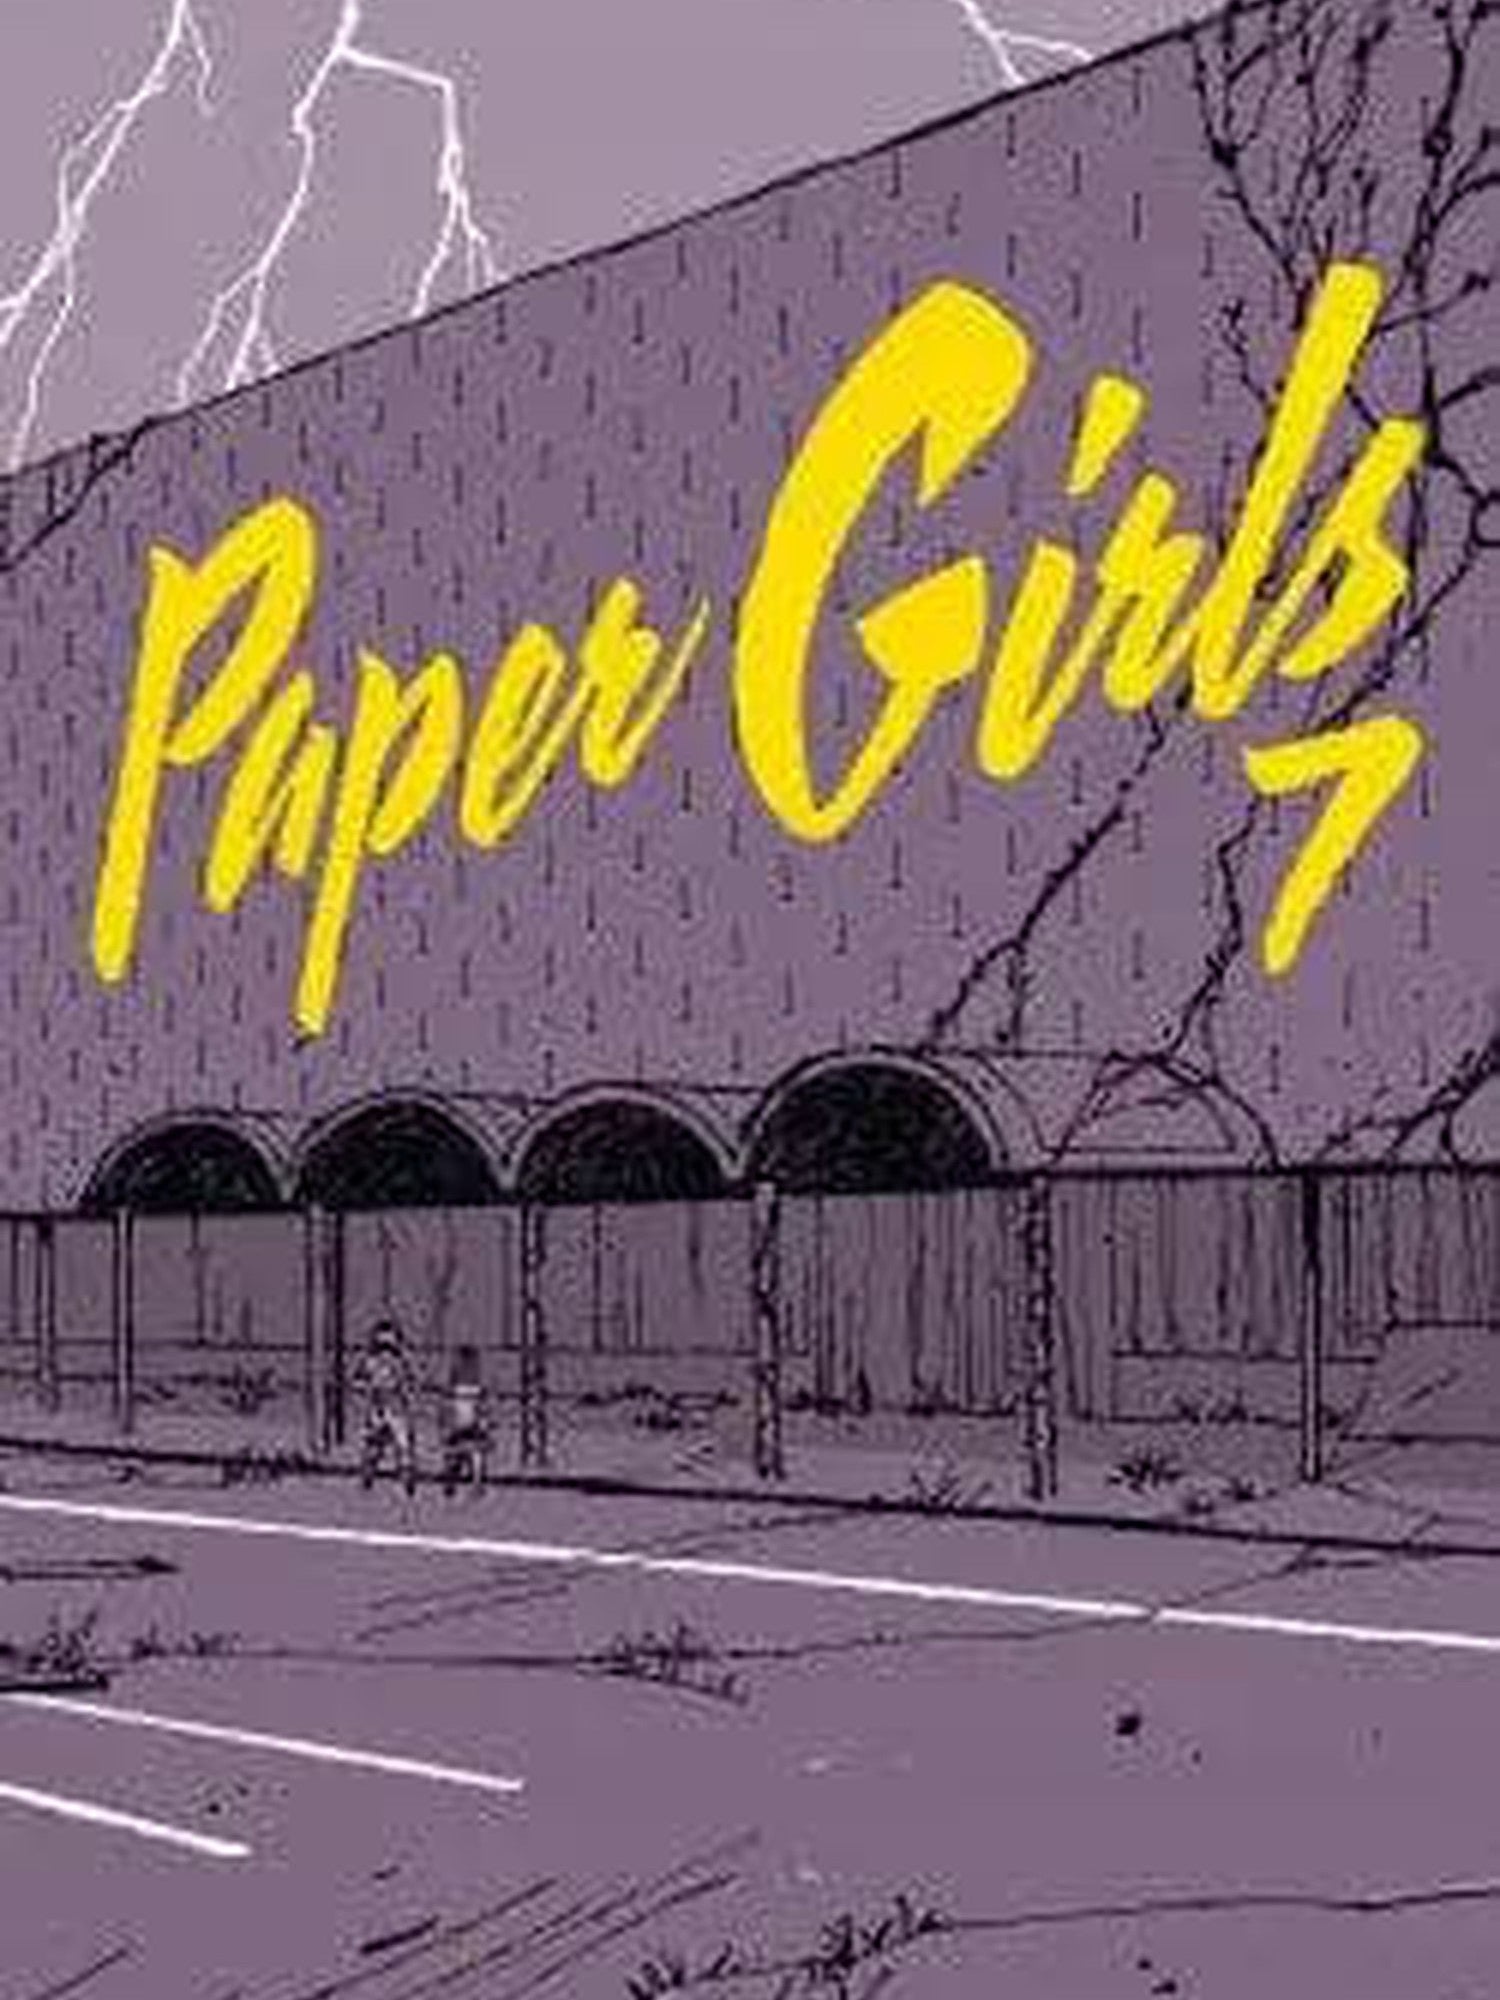 Paper Girls #7 Planeta ENcuadrocomics